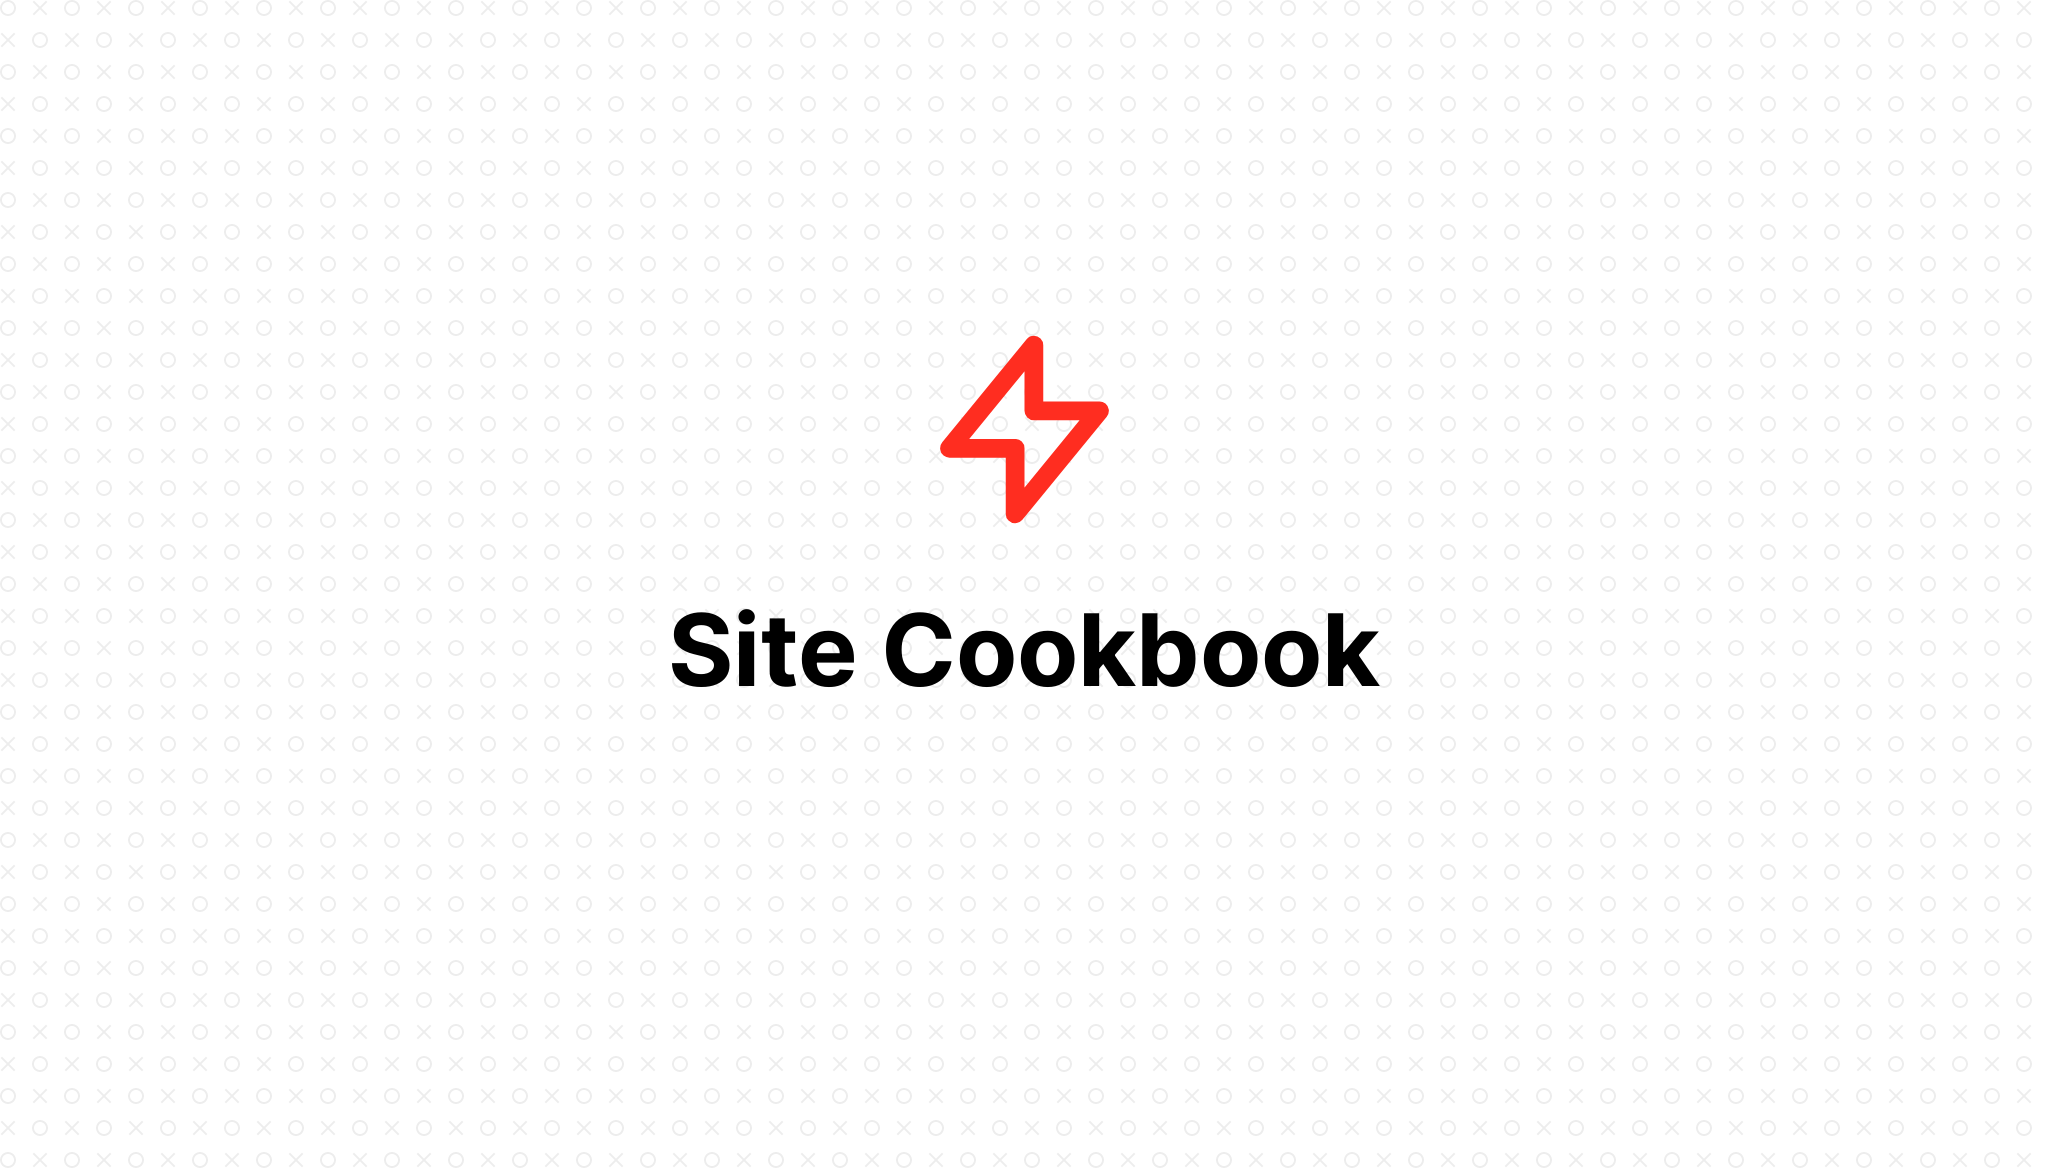 Site Cookbook